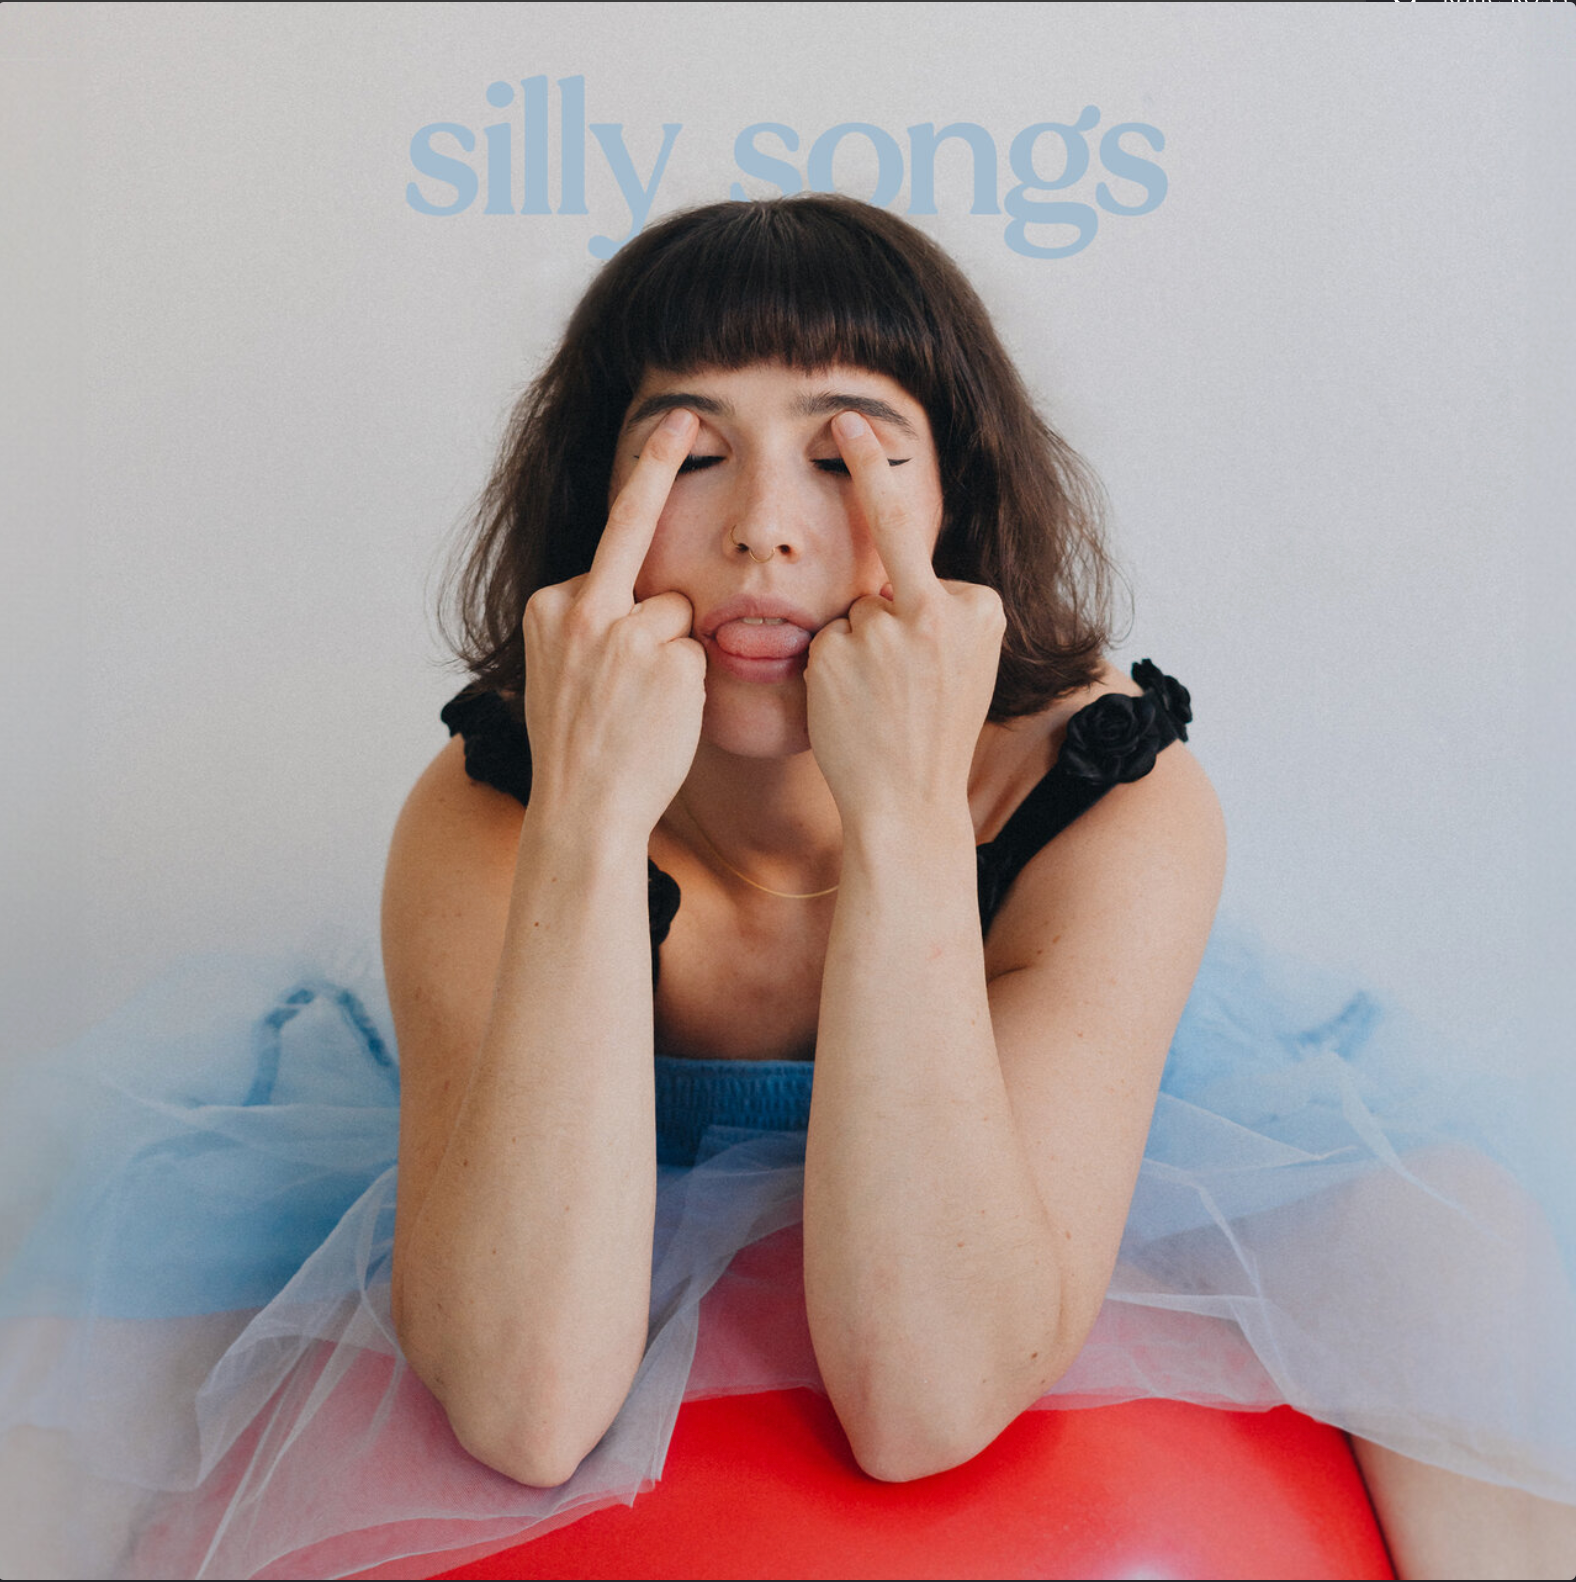 Katie Koss - Silly Songs (single)